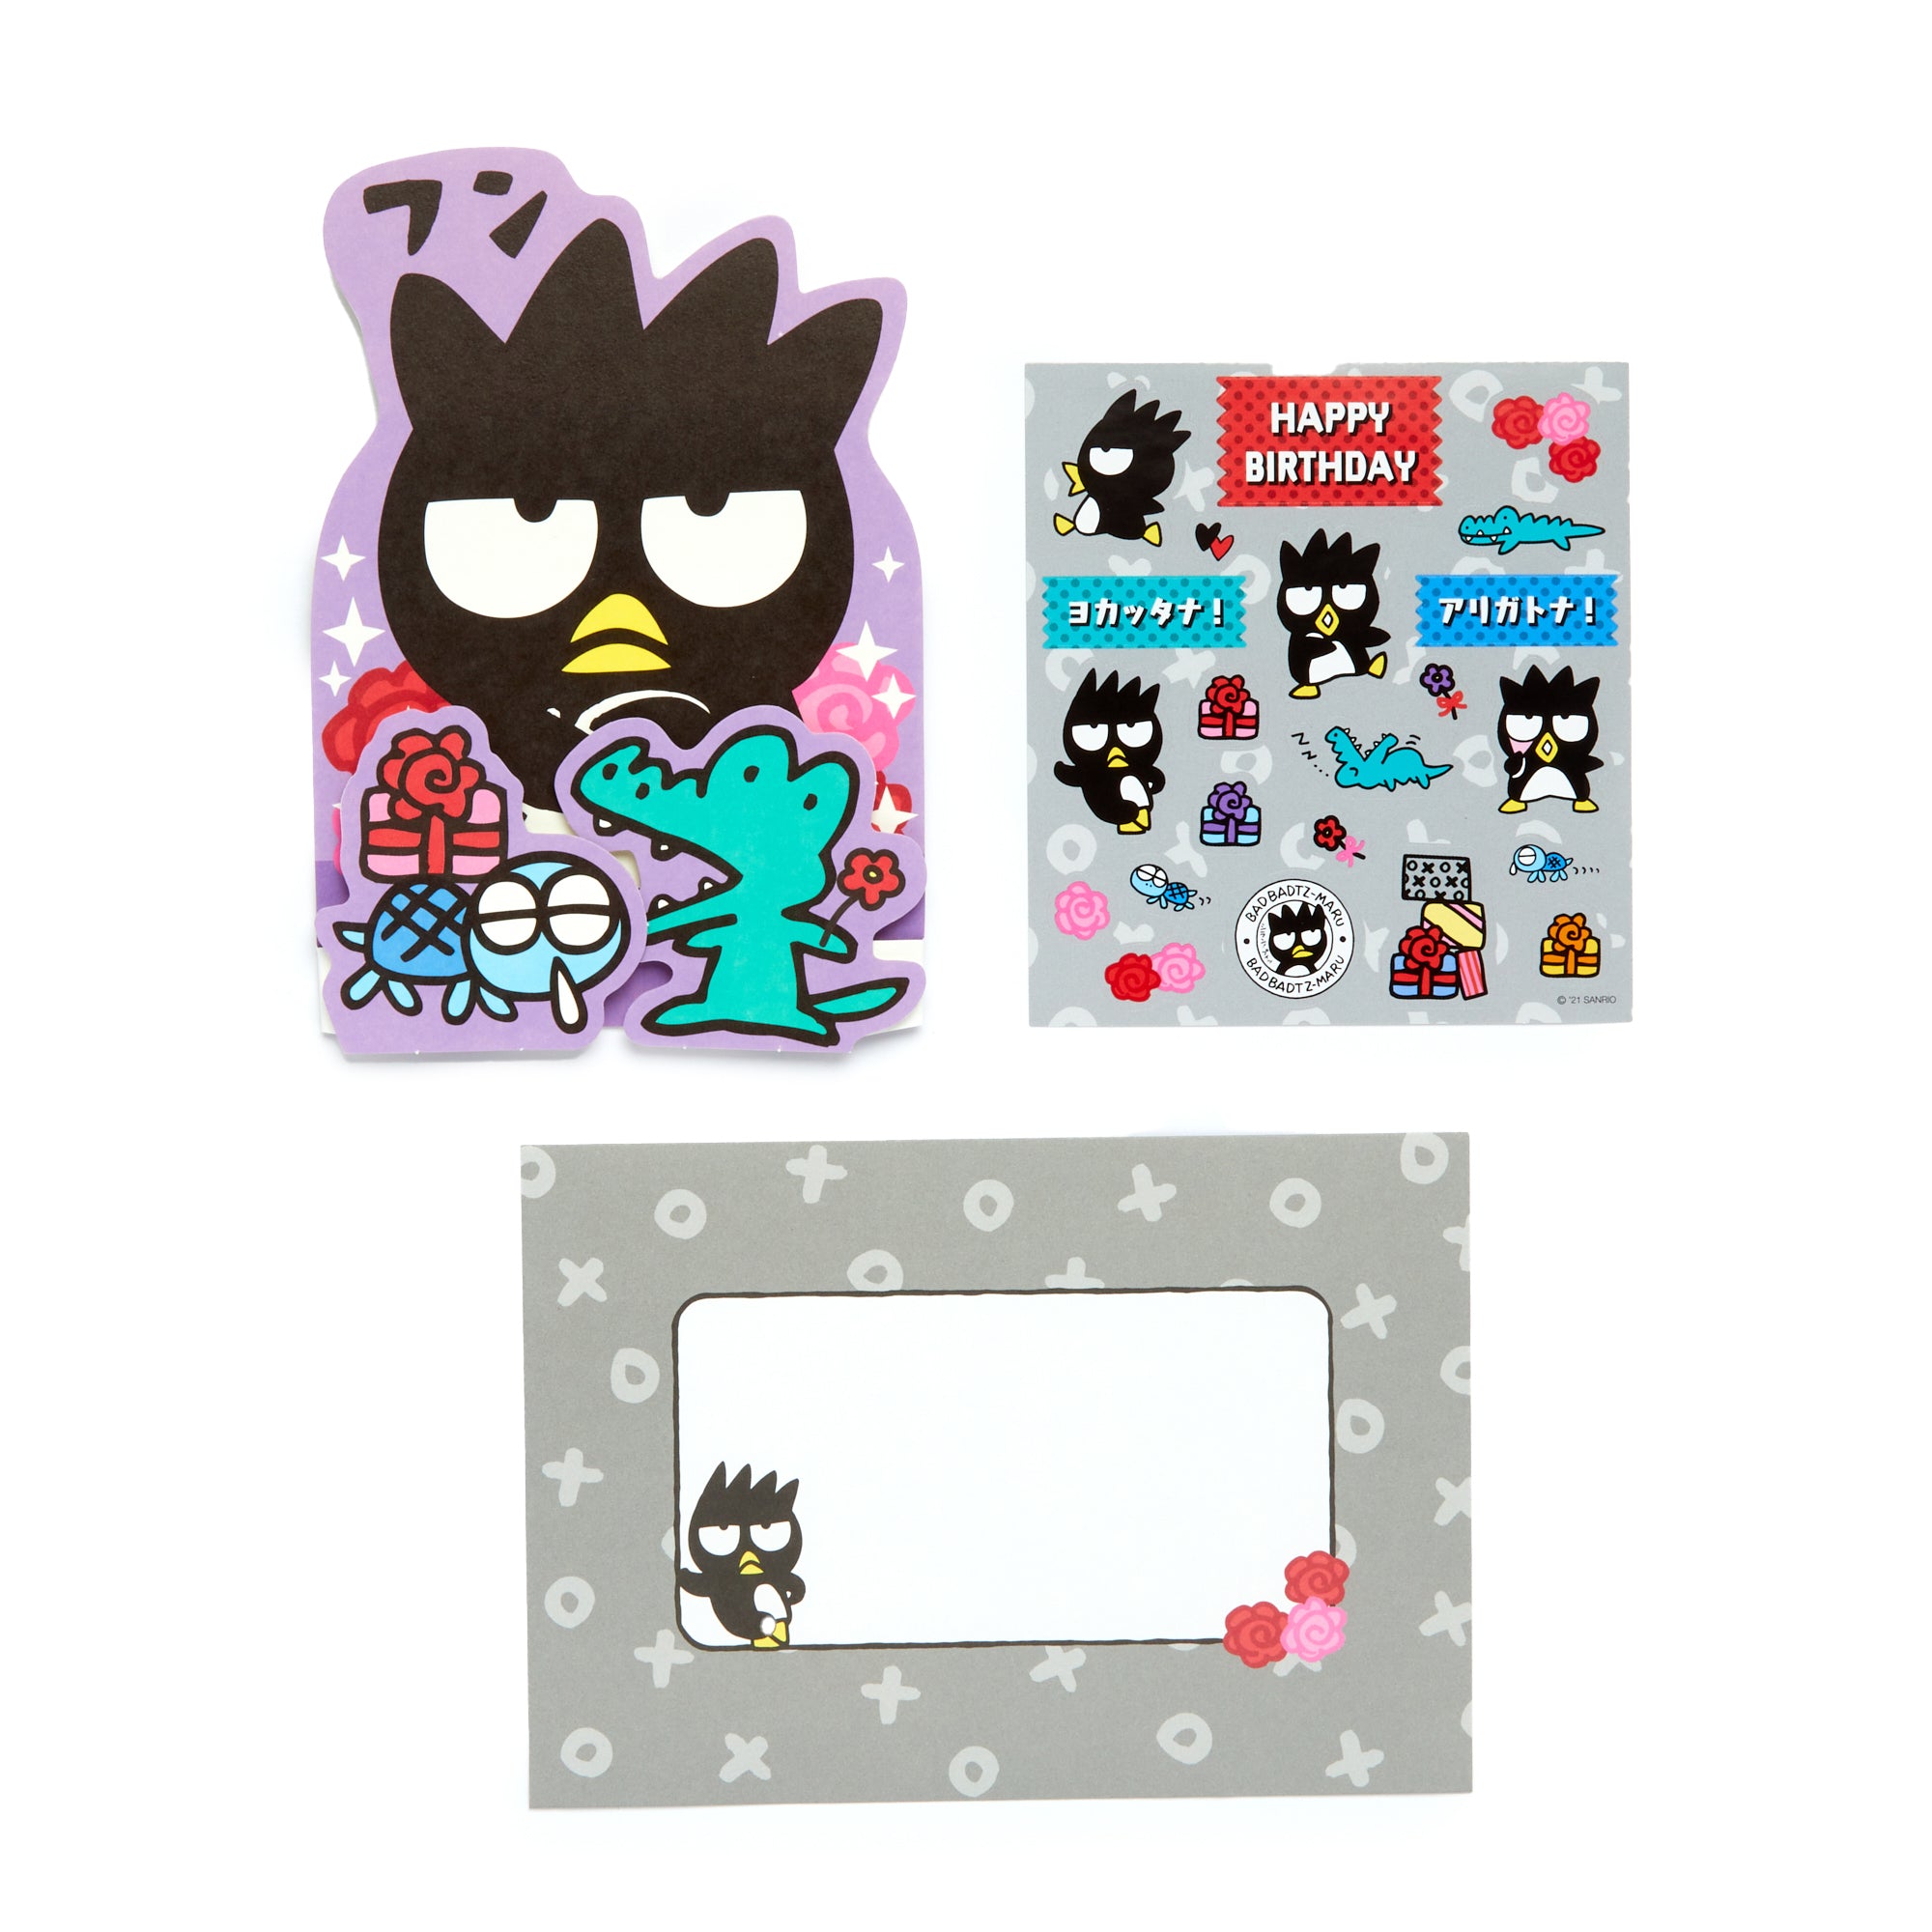 Badtz-maru Stickers and Greeting Card Stationery Japan Original   